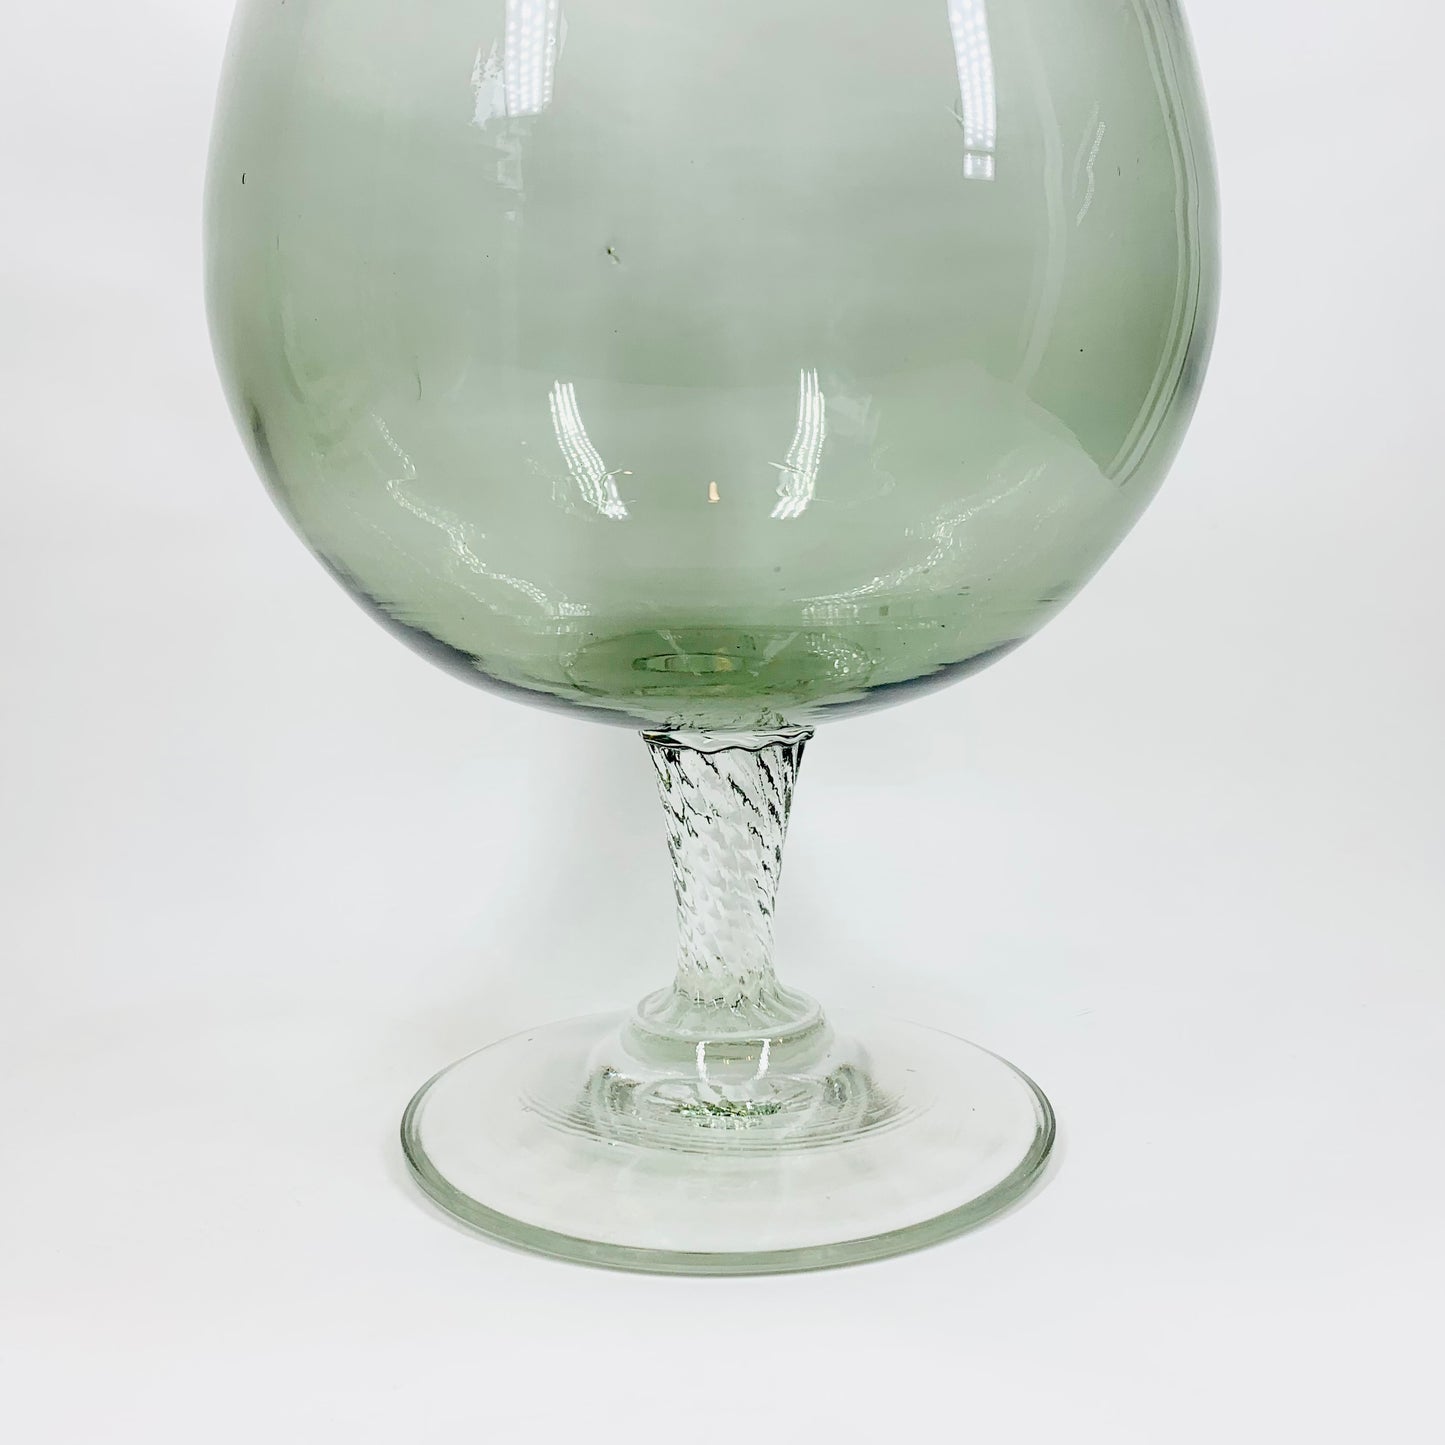 Huge Midcentury Italian grey glass brandy balloon vase with clear stem